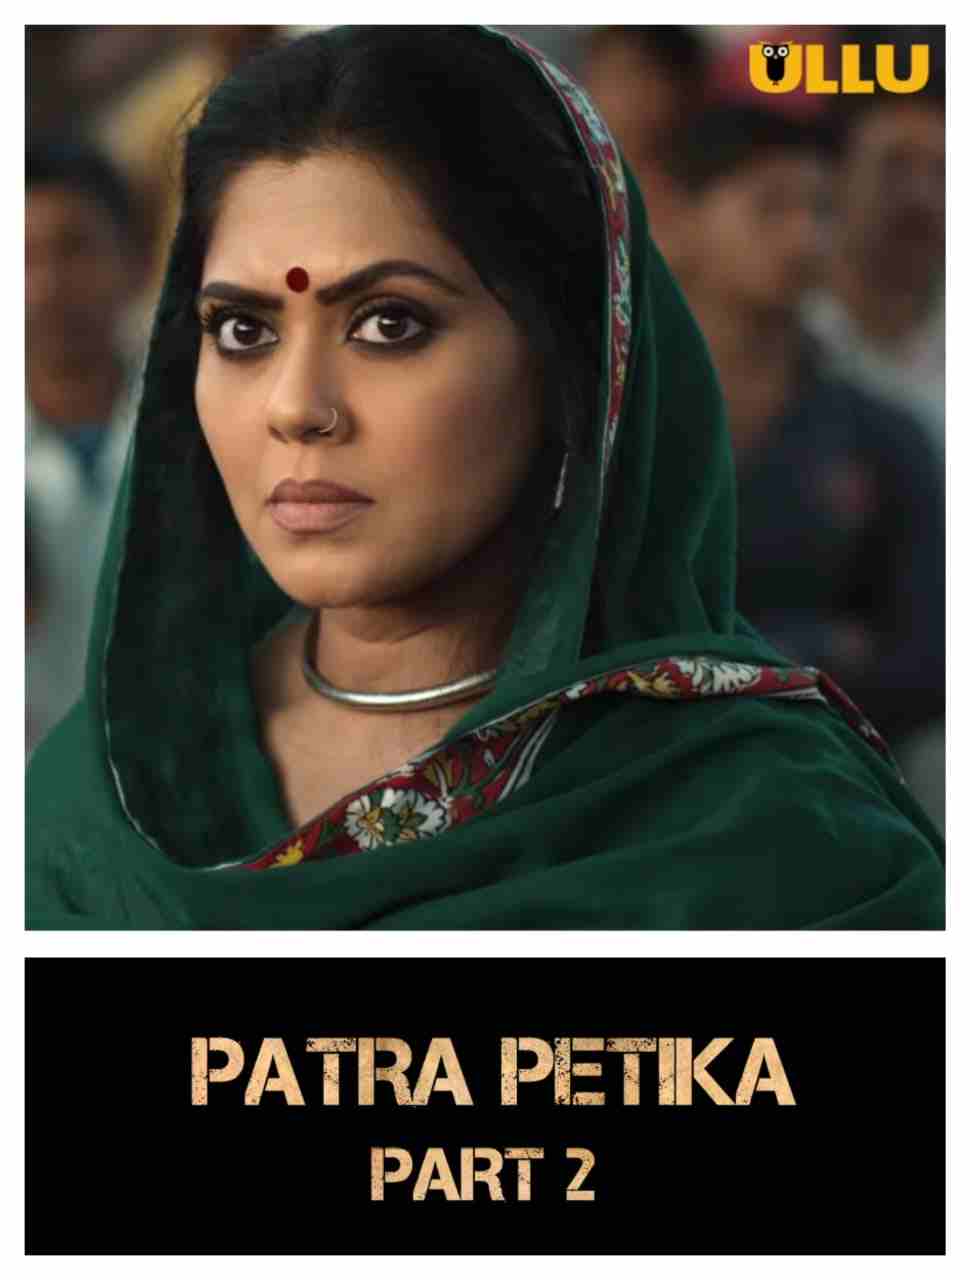 Patra Petika (Part 2) UllU Original Hindi Web Series Watch Online